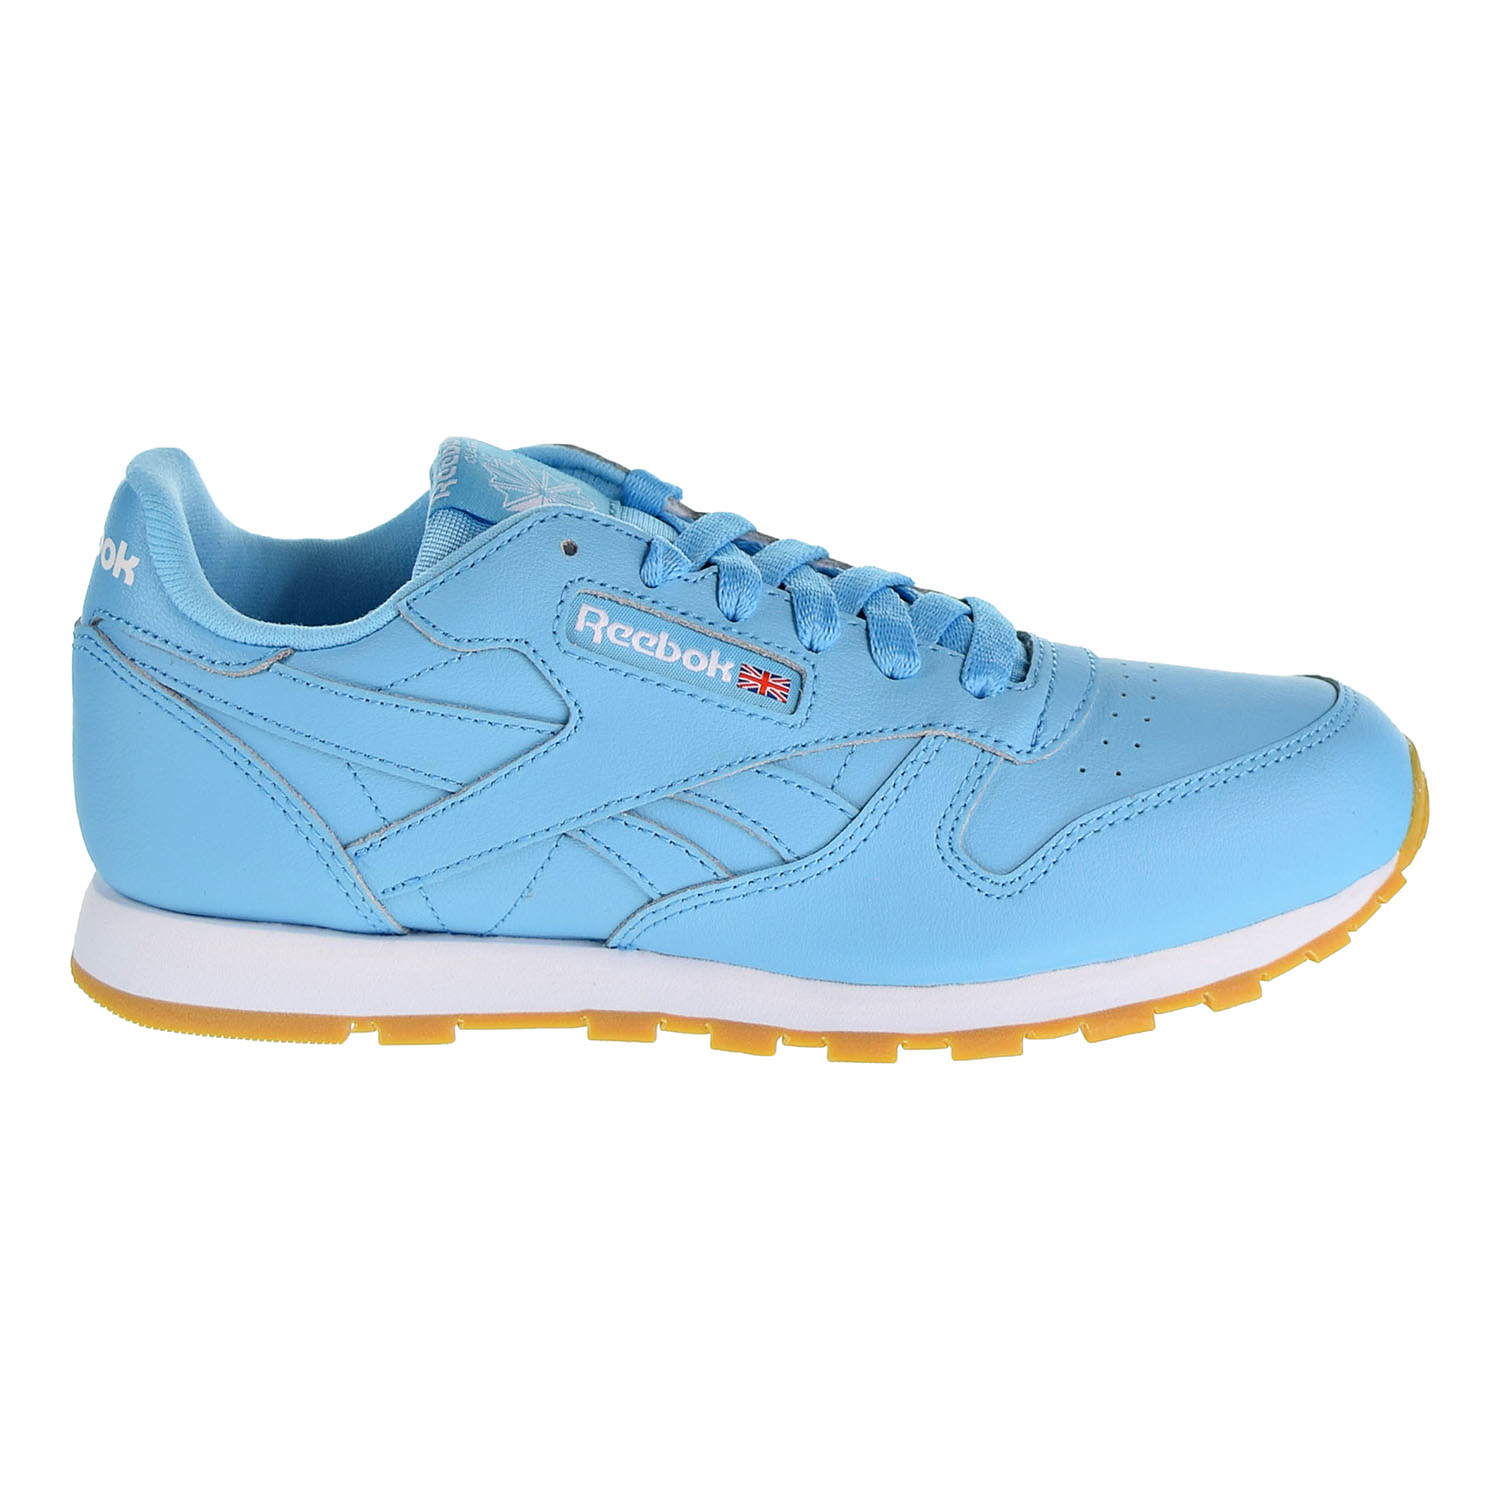 Reebok Classic Leather Gum Boys Shoes Crisp Blue/White/Gum cn4095 - image 1 of 6